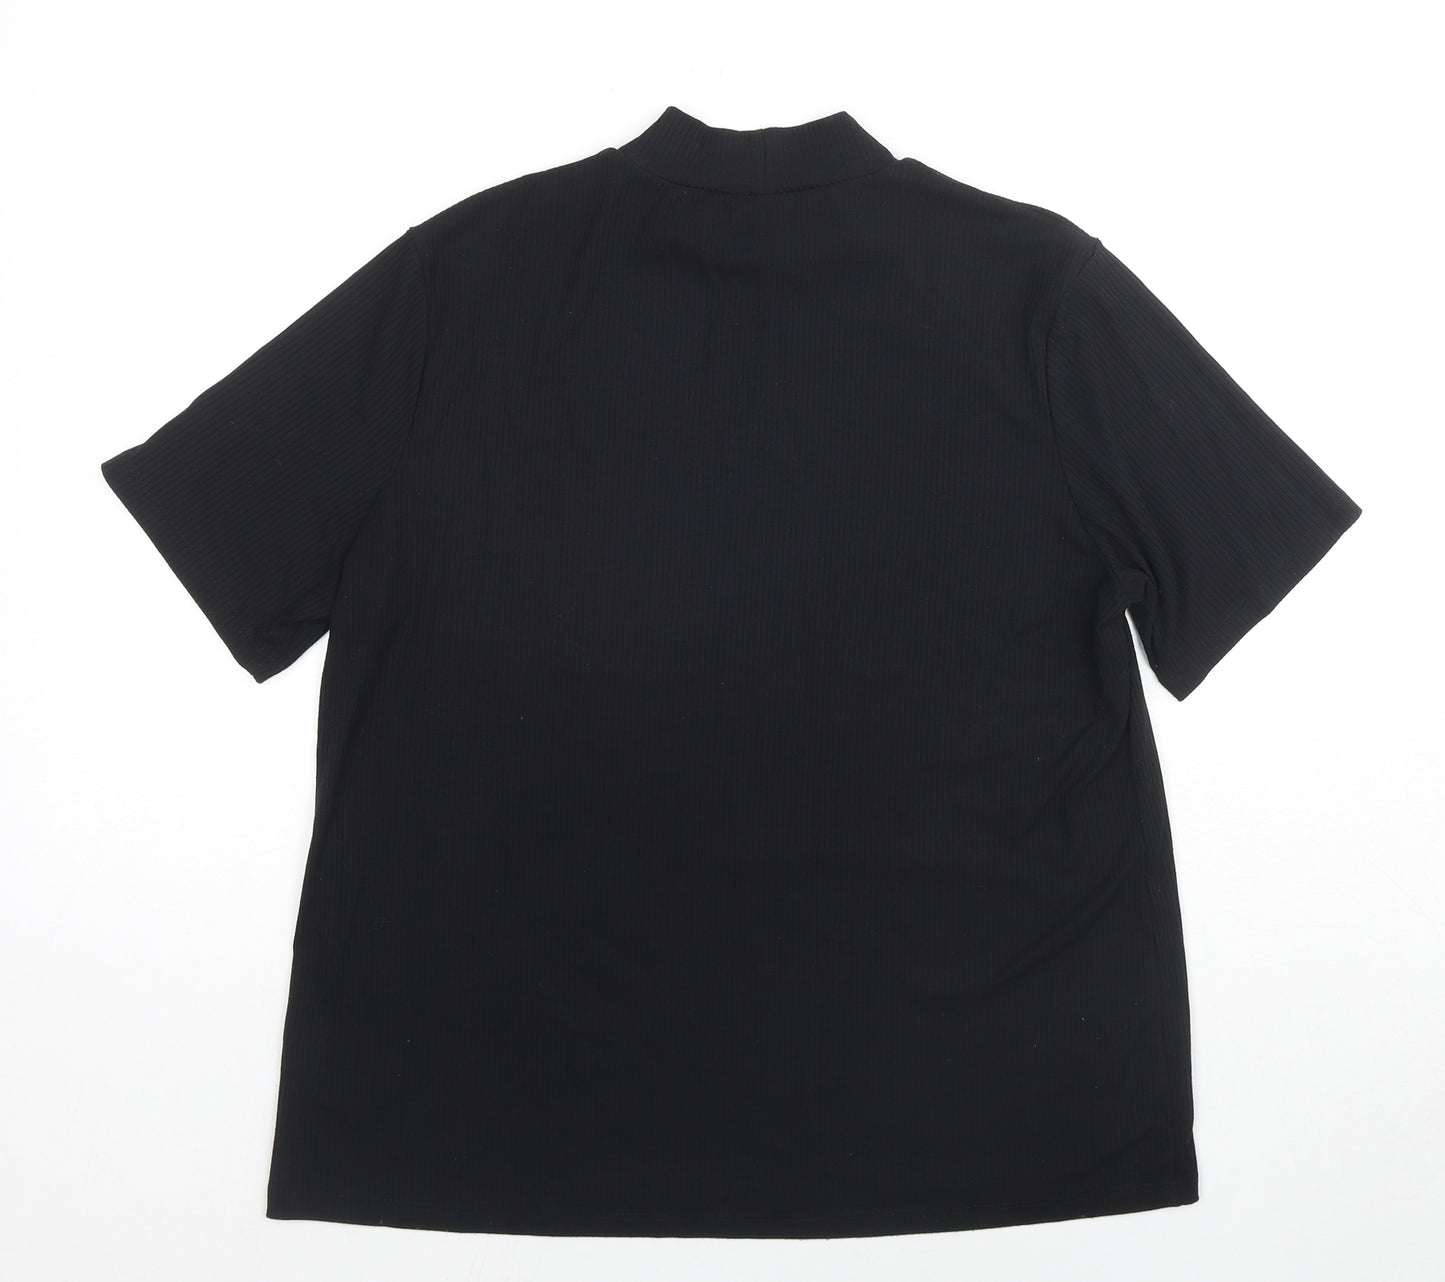 H&M Womens Black Polyester Tunic Blouse Size XL Mock Neck